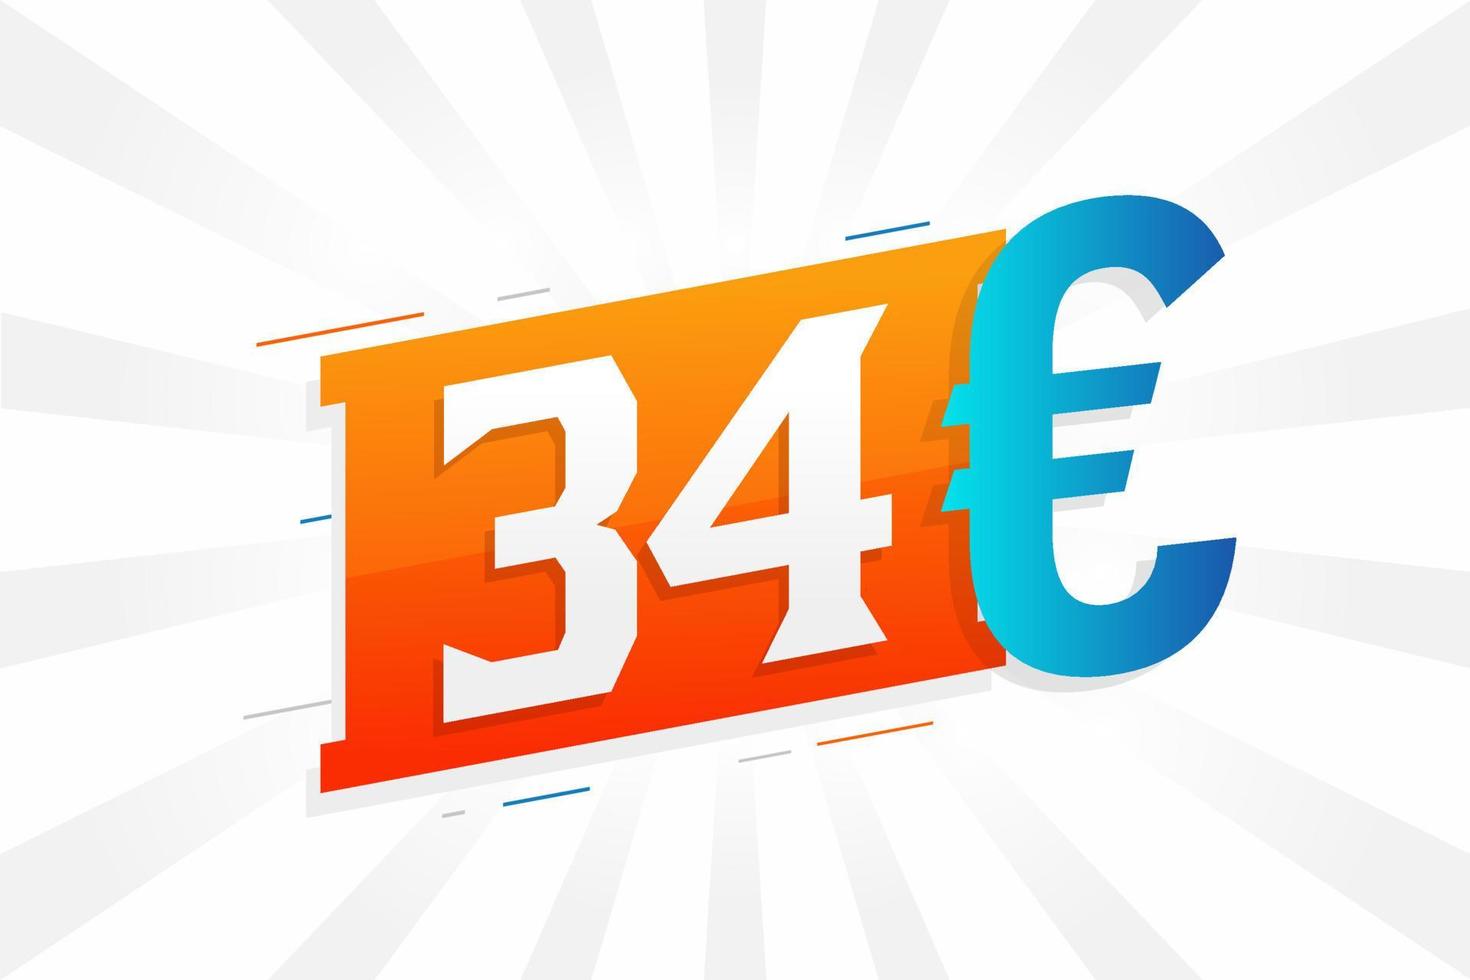 Símbolo de texto vectorial de moneda de 34 euros. vector de stock de dinero de la unión europea de 34 euros